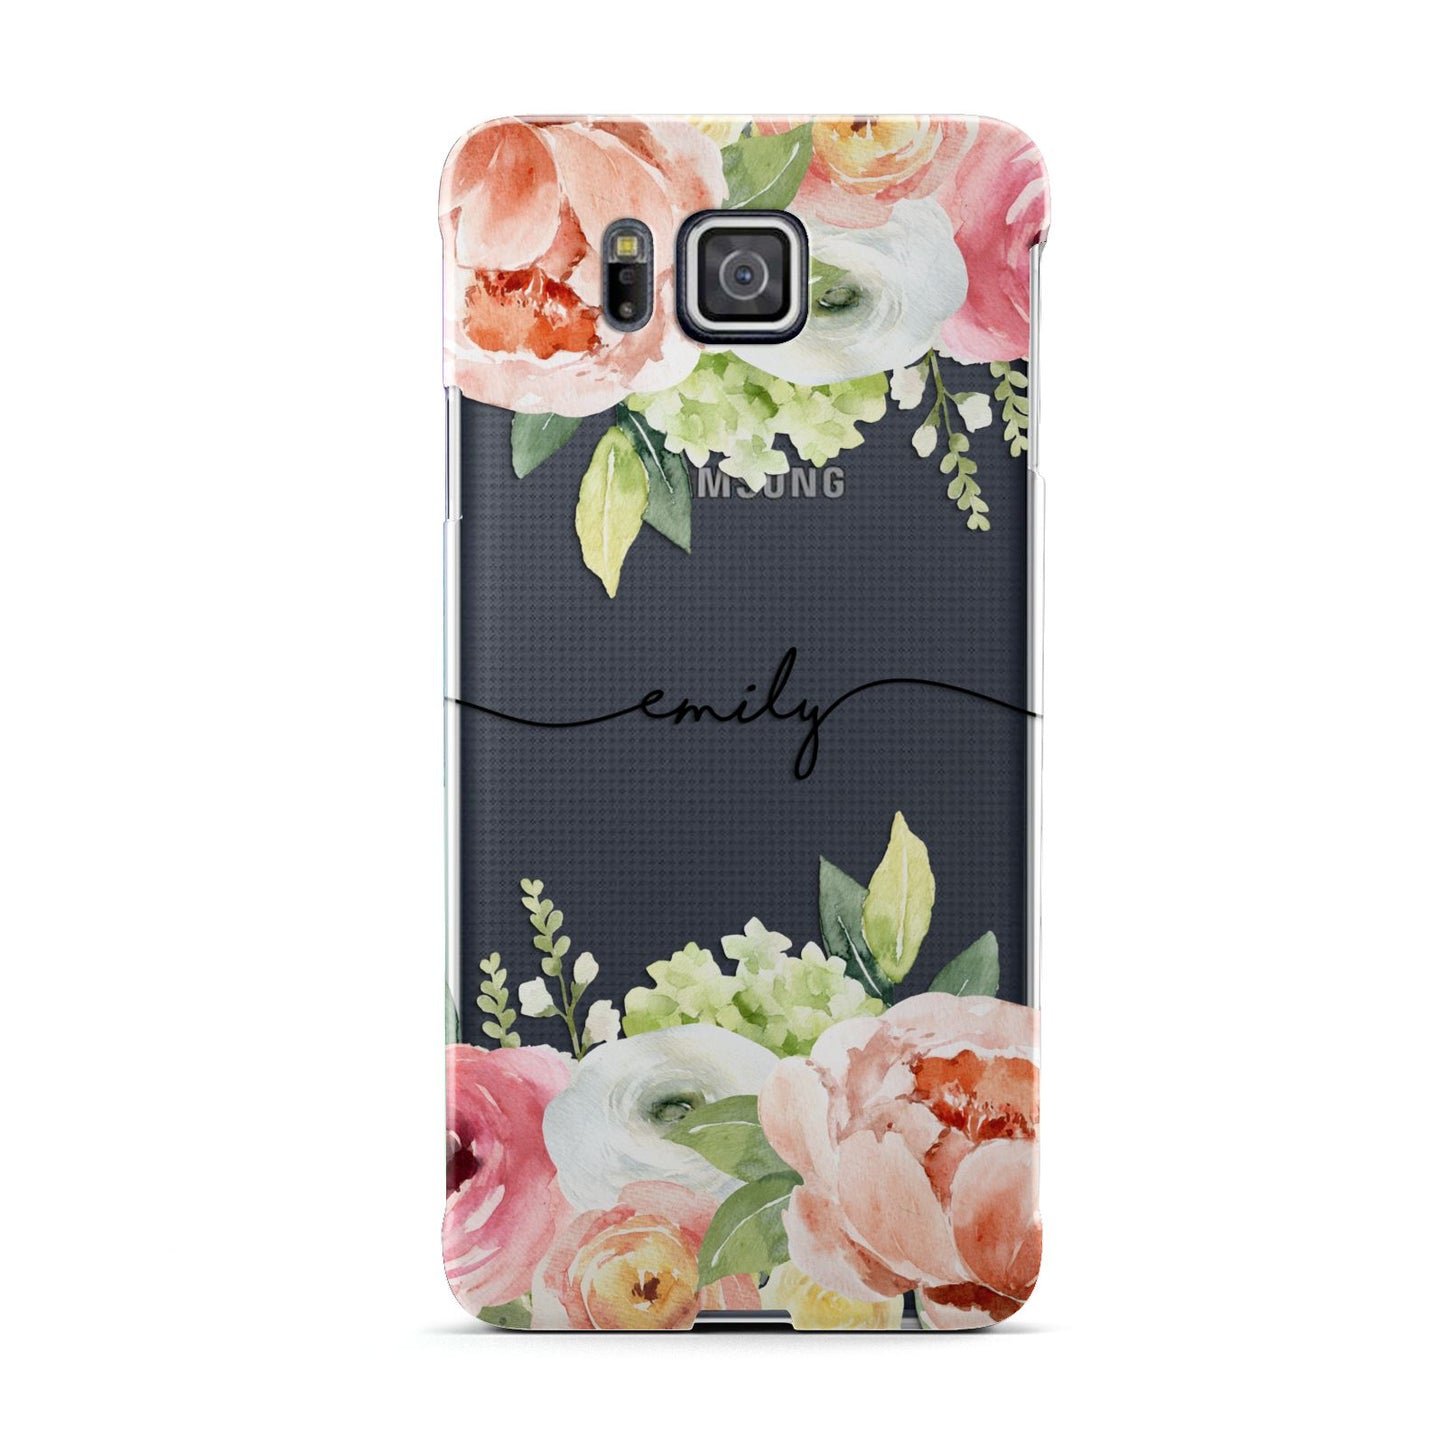 Personalised Flowers Samsung Galaxy Alpha Case